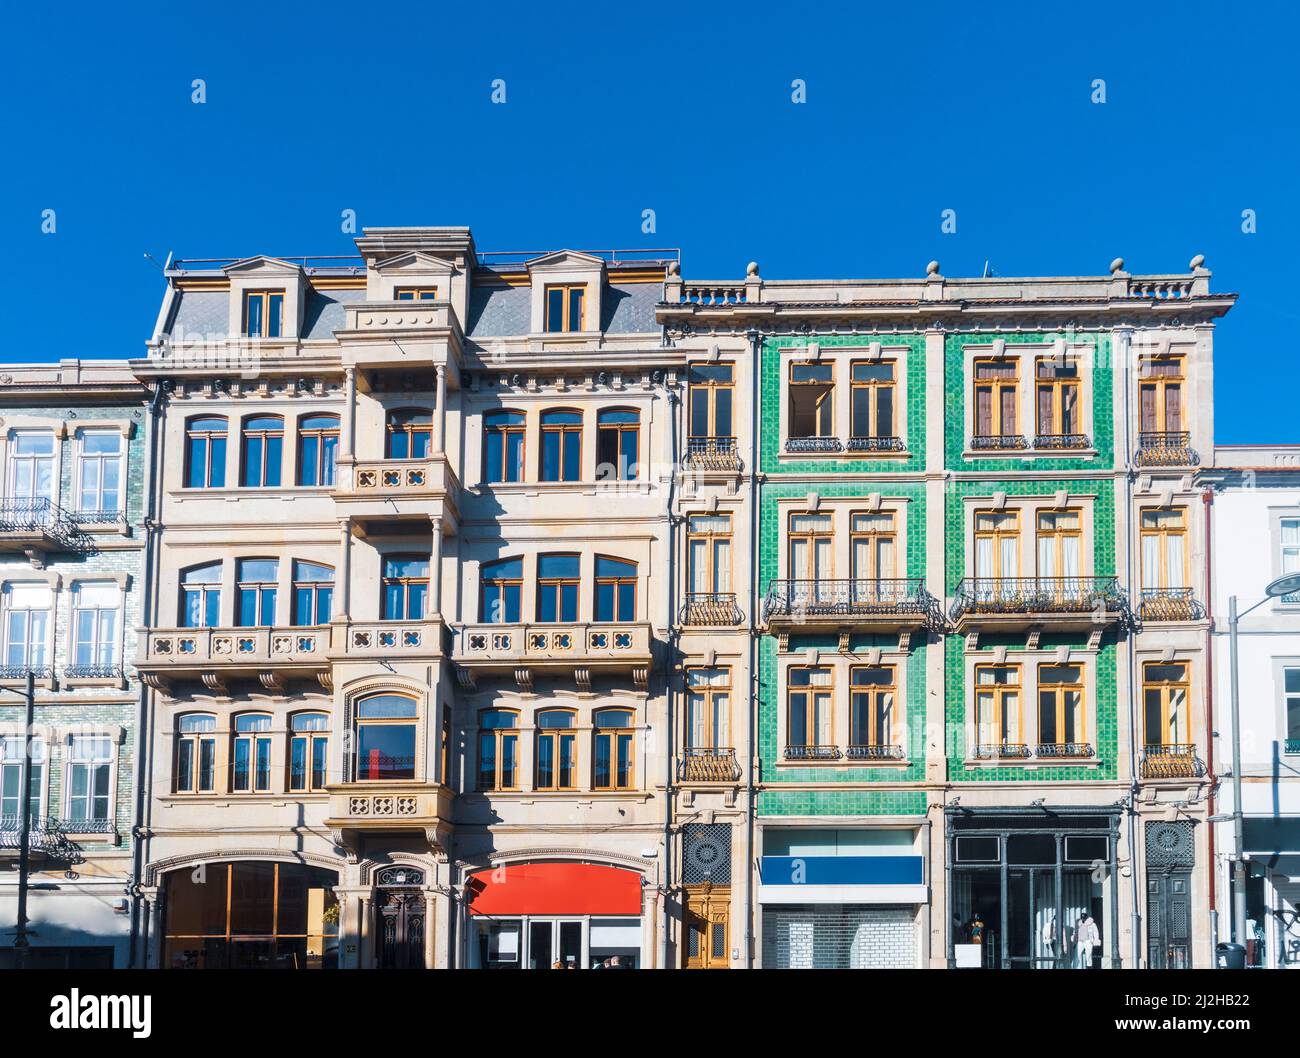 Portugal, Porto, Colorful apartment buildings Stock Photo